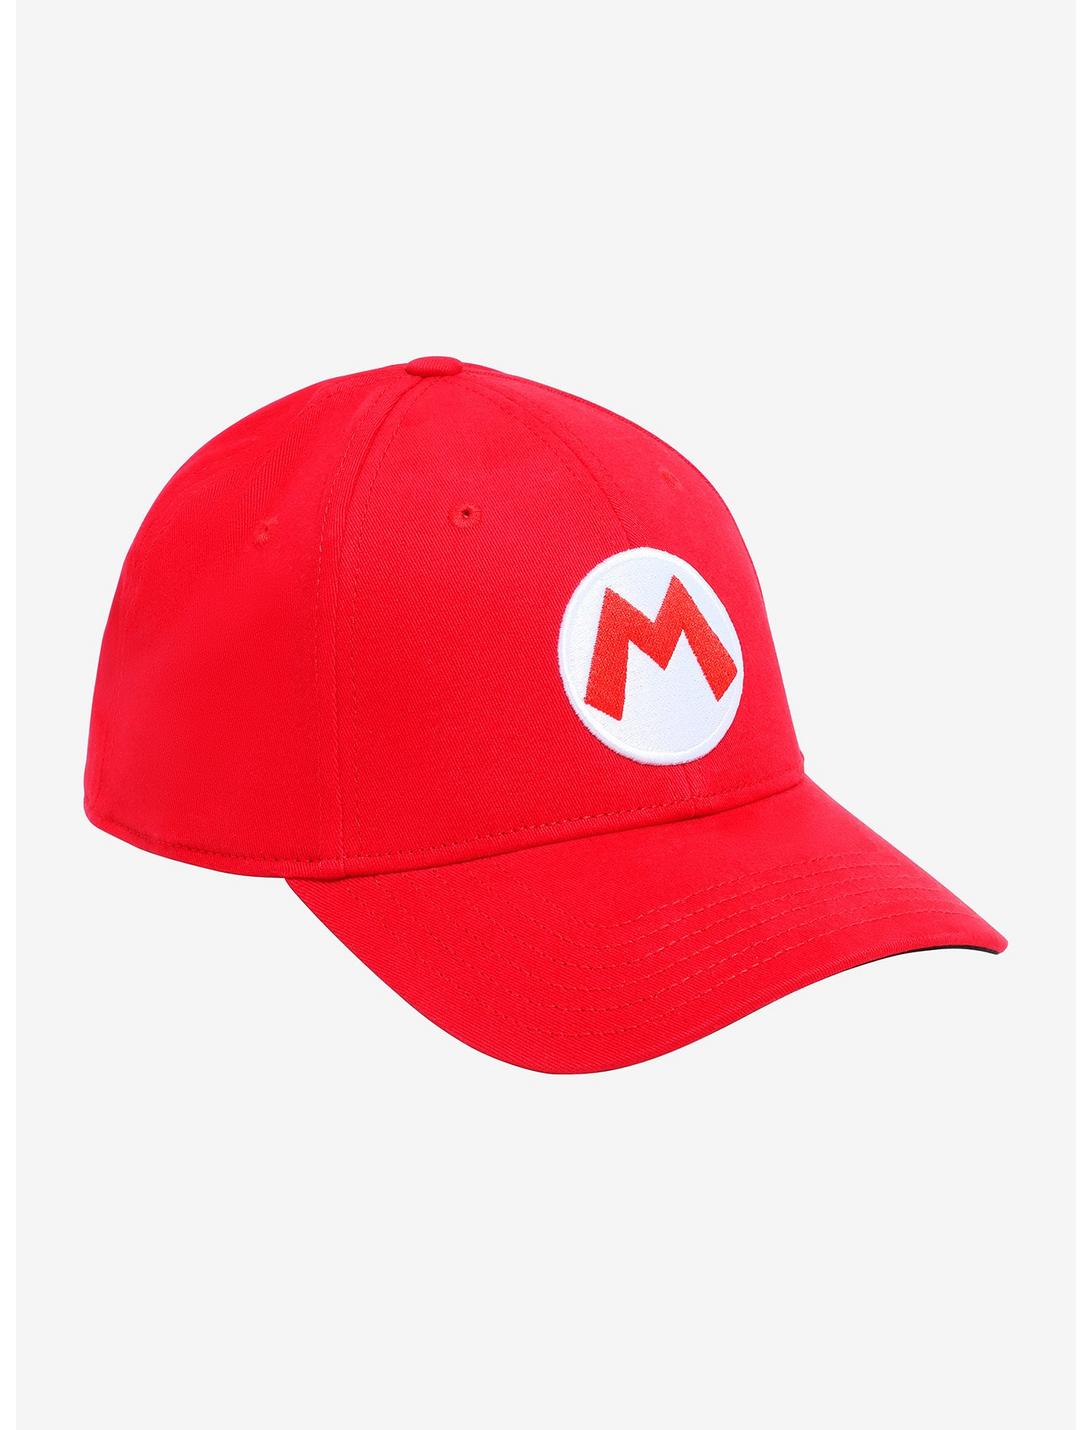 Super Mario Red Dad Cap, , hi-res